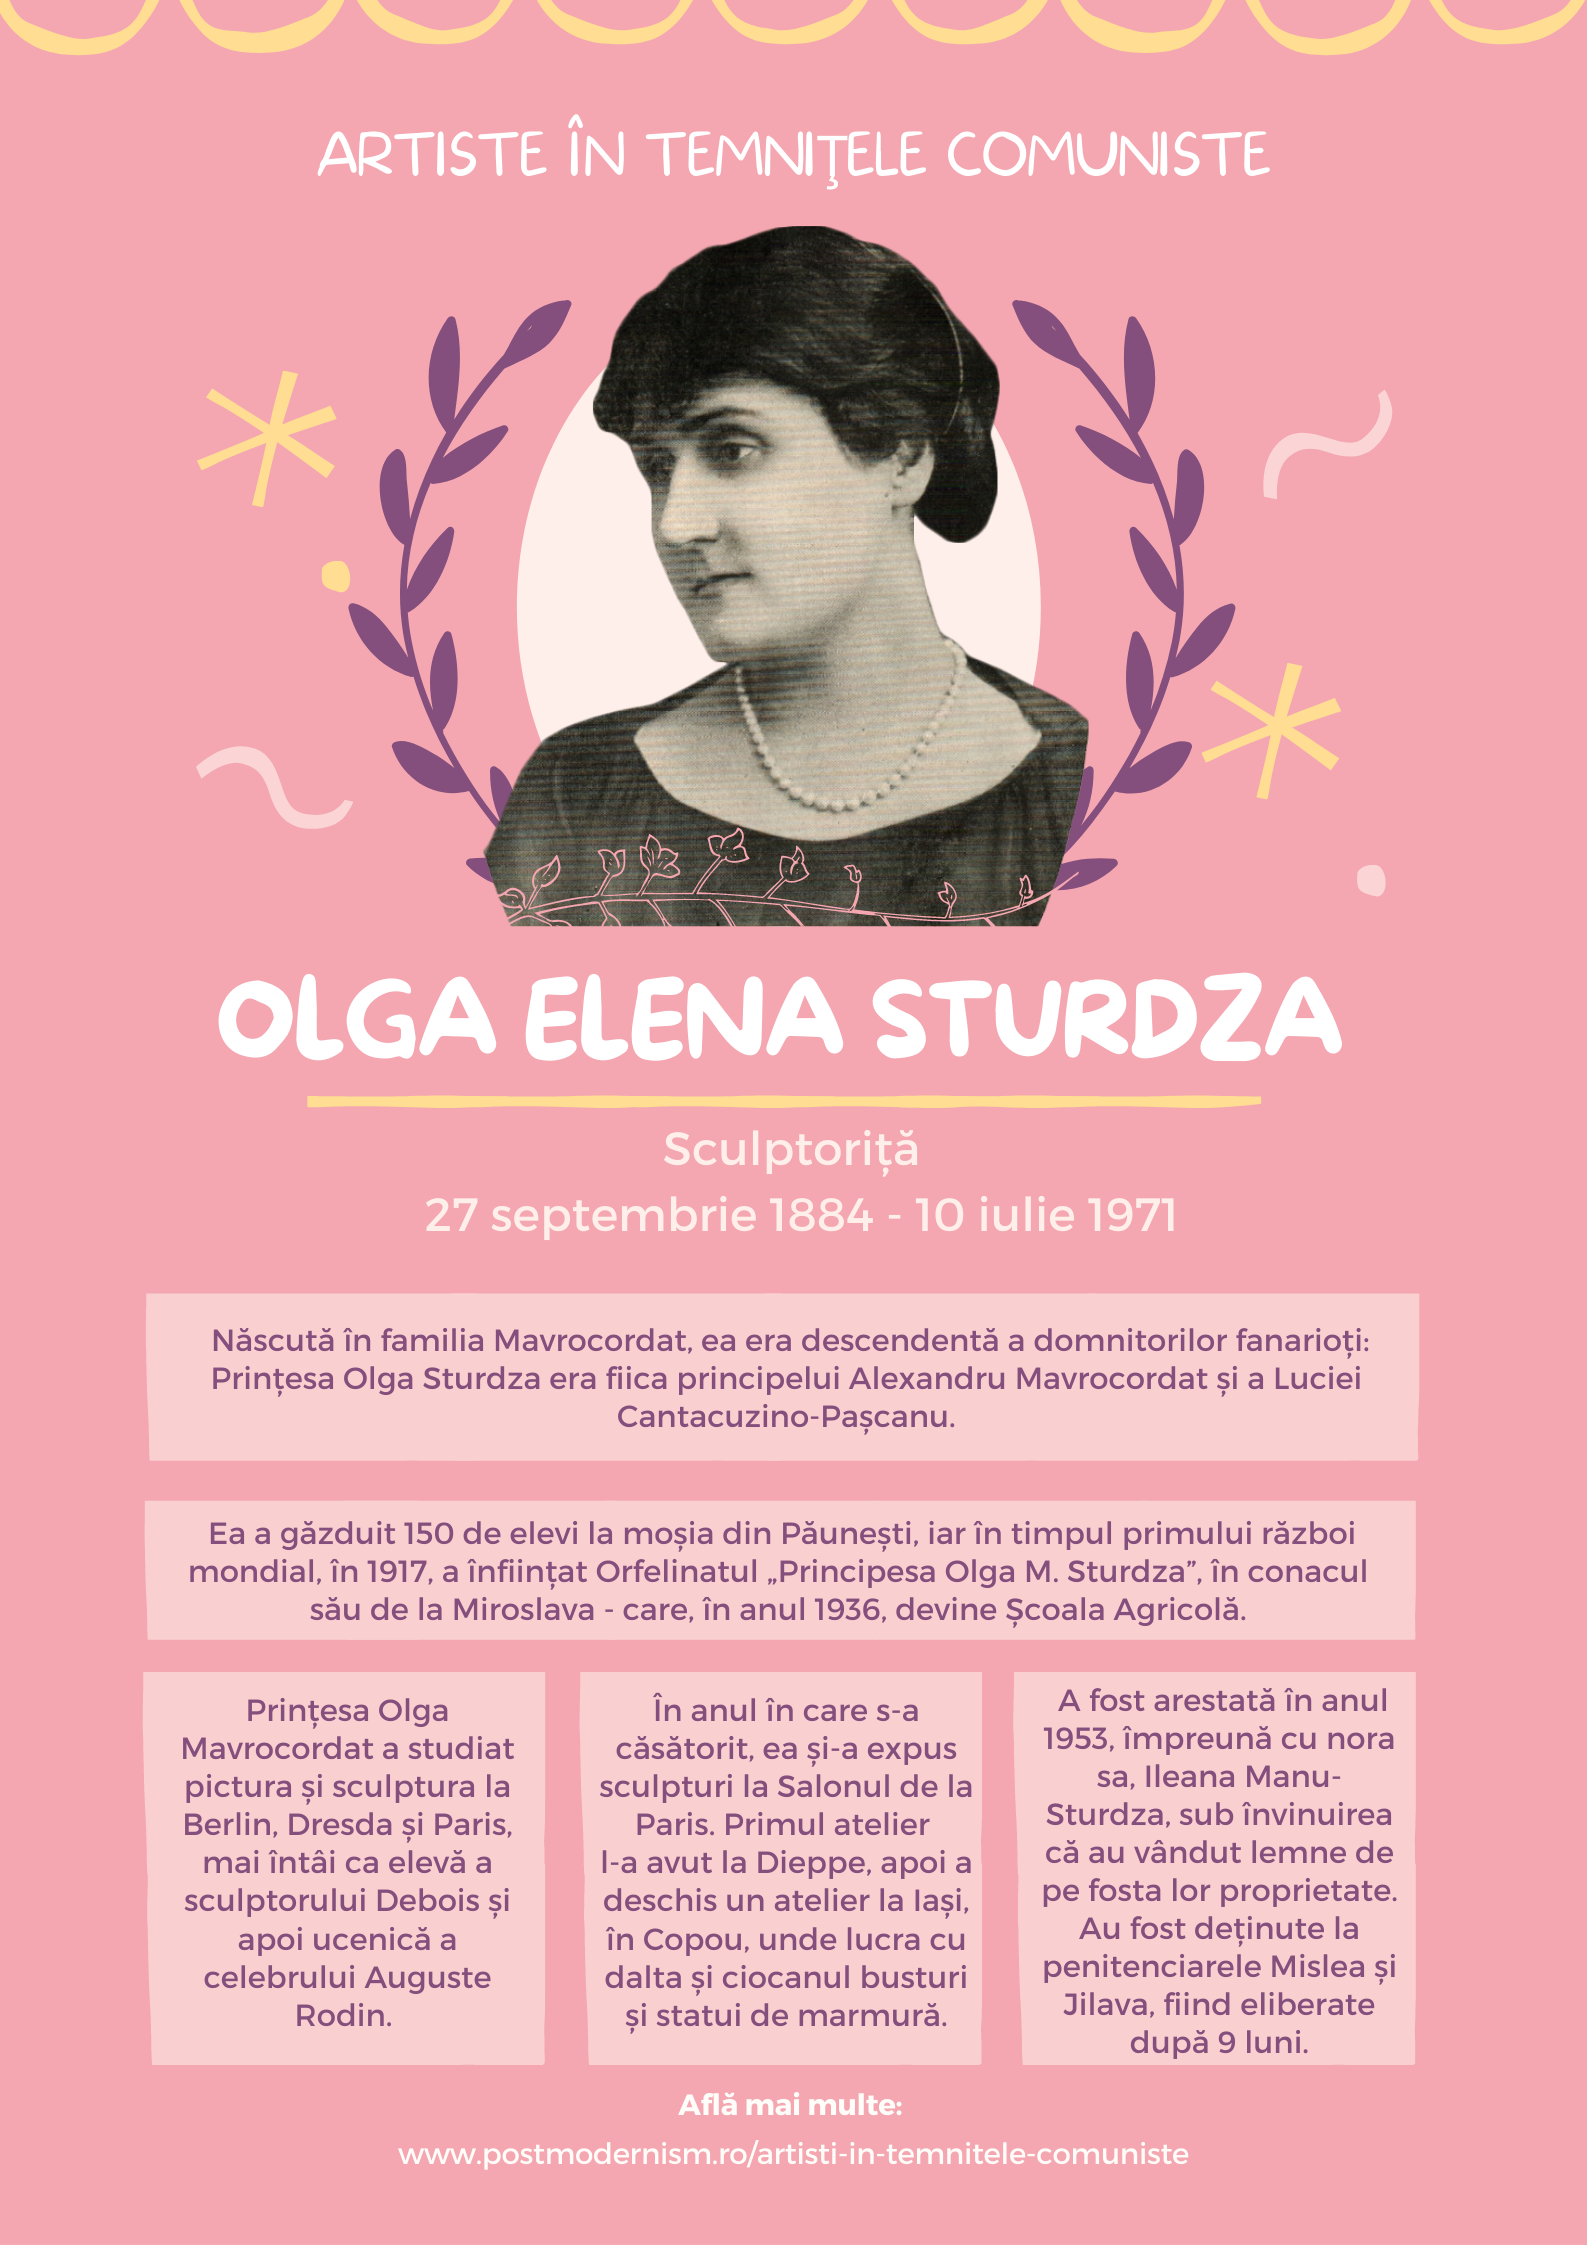 Olga Elena Sturza